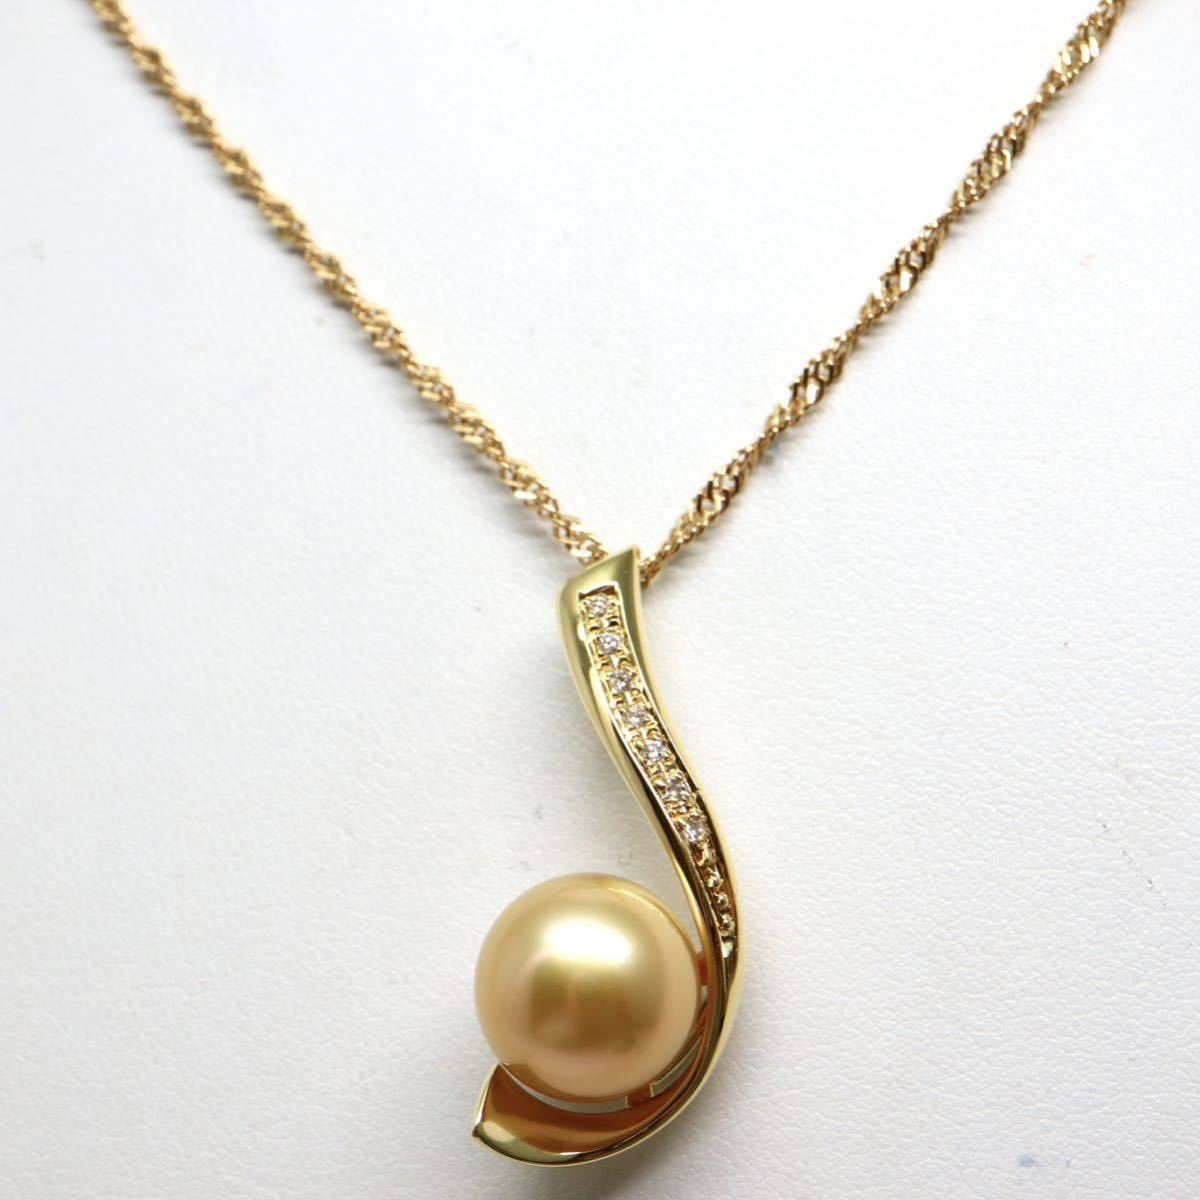 《K18(750)天然ダイヤモンド&ゴールデンパールネックレス》D 11mm珠 8.2g 42.5cm pearl necklace jewelry ジュエリー 白蝶 diamond EE1/EF4_画像1